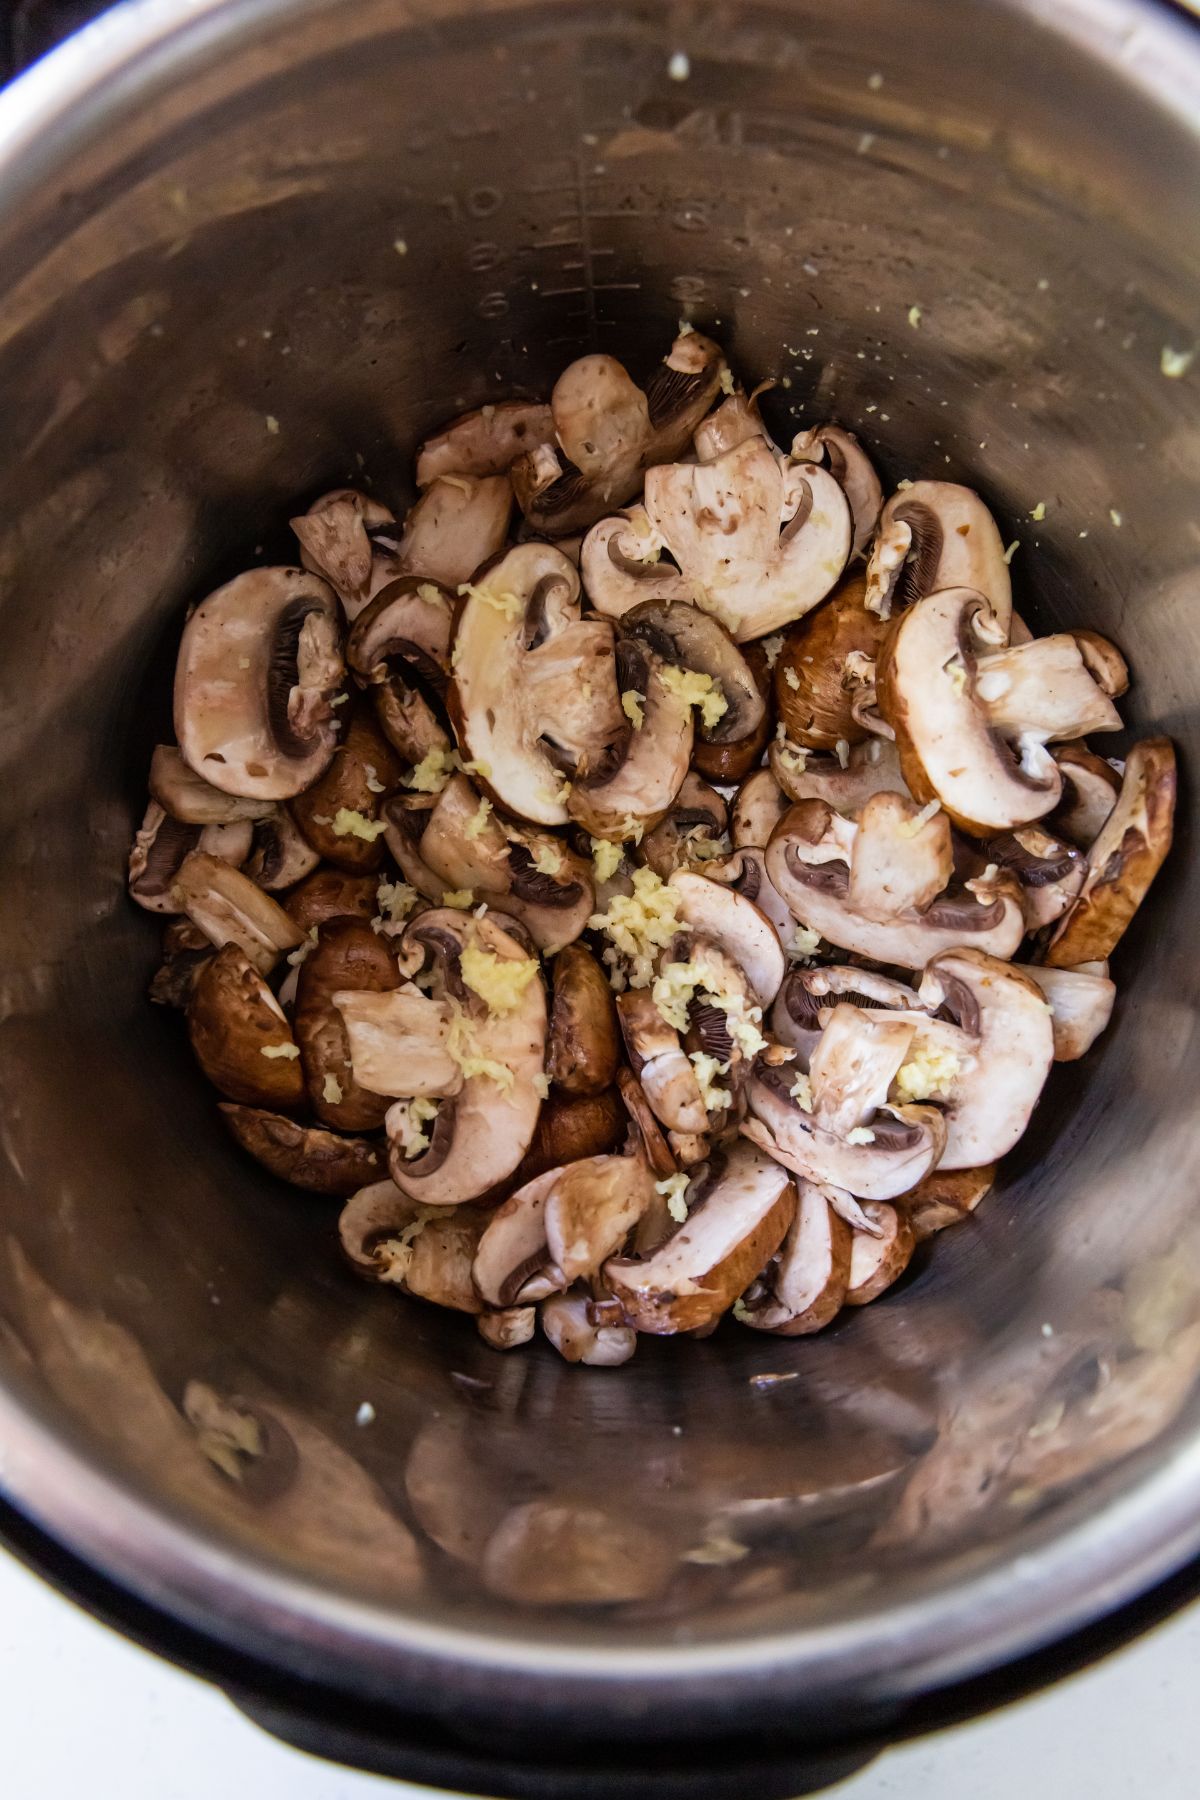 raw mushrooms inside the instant pot